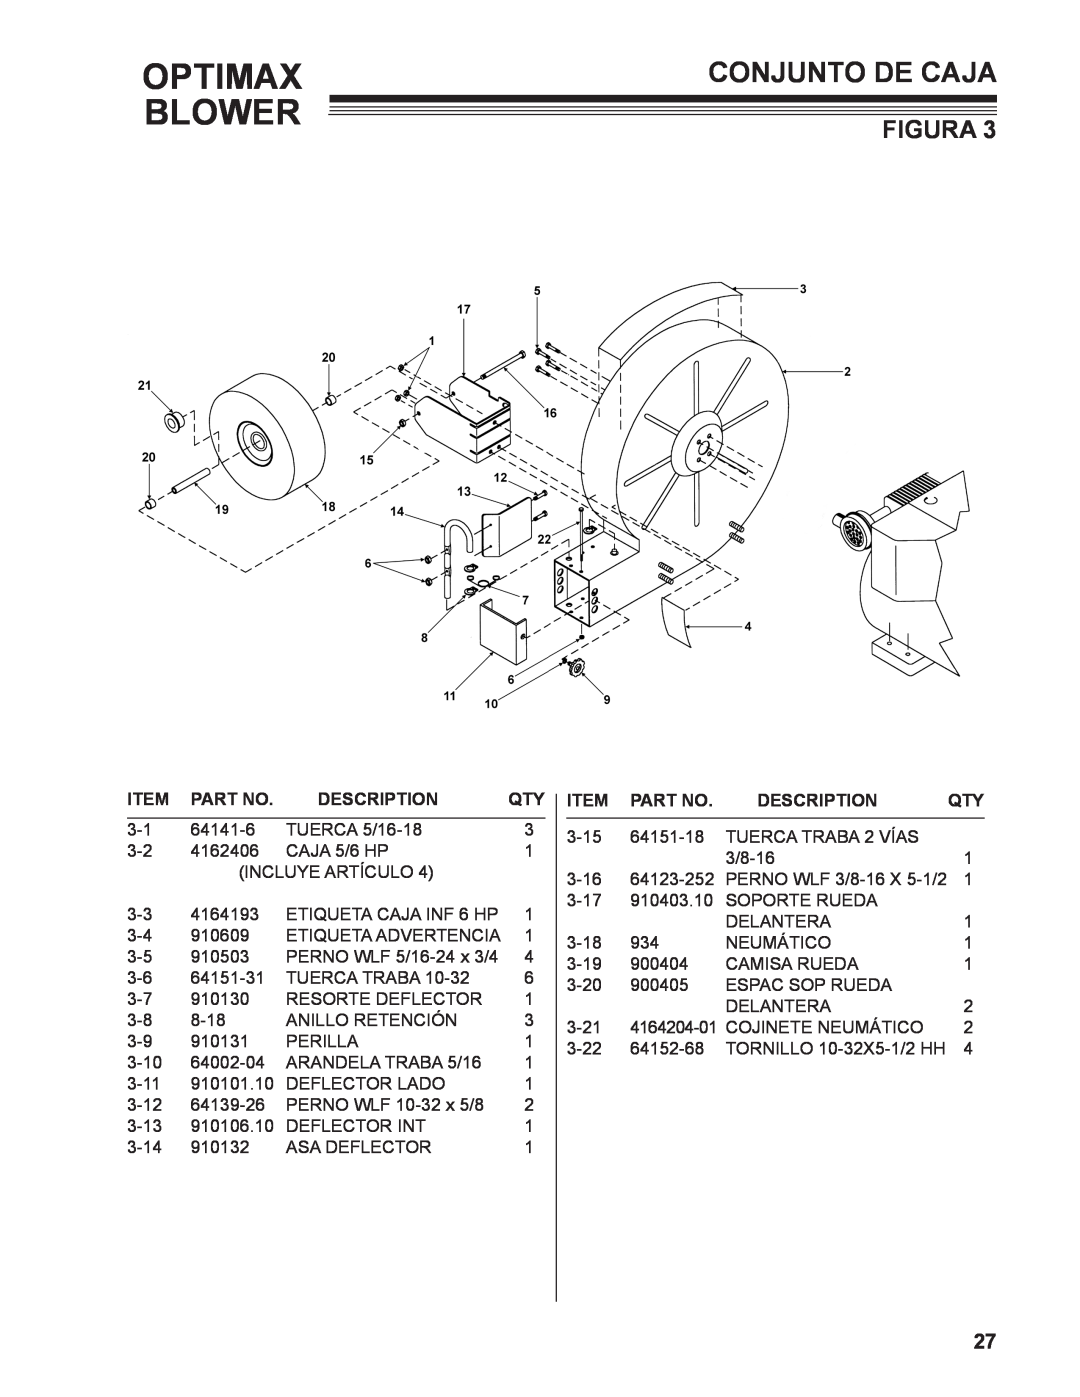 Little Wonder LB601-00-01 technical manual Conjunto De Caja, Optimax Blower, Figura, Description 